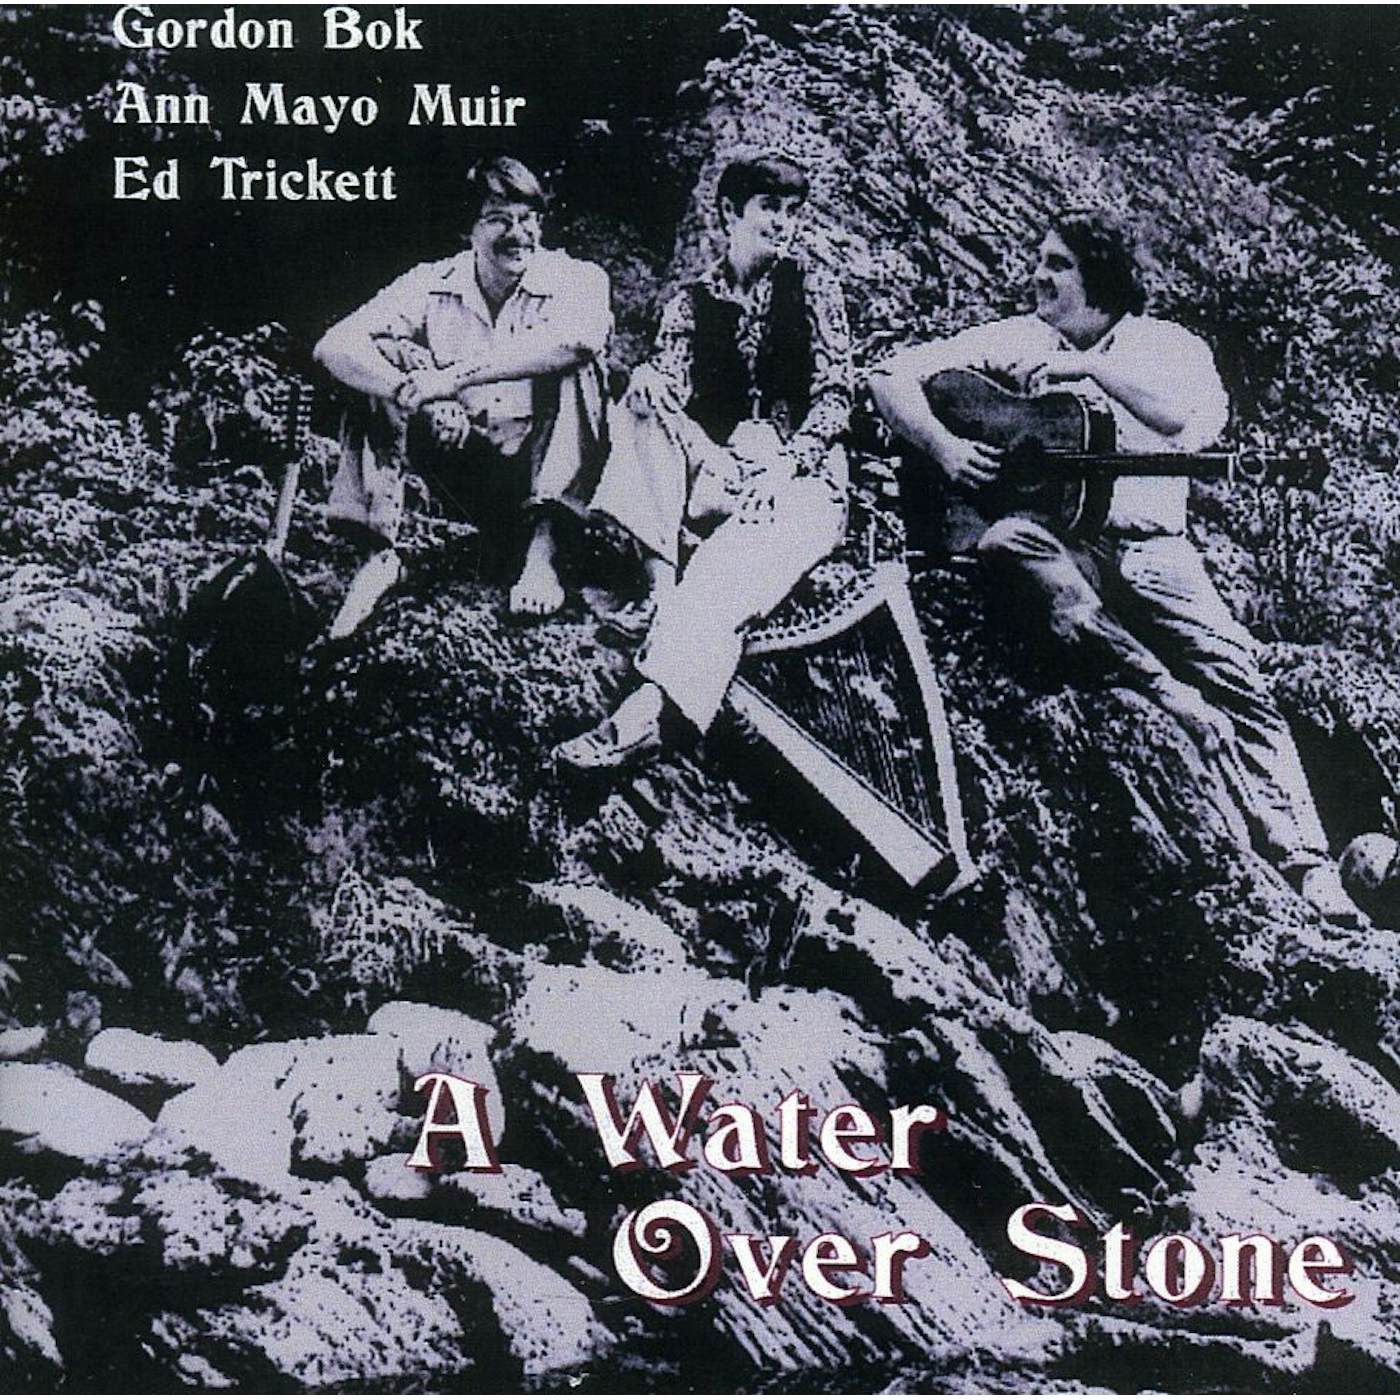 Gordon Bok, Ed Trickett, Ann Mayo Muir WATER OVER STONE CD